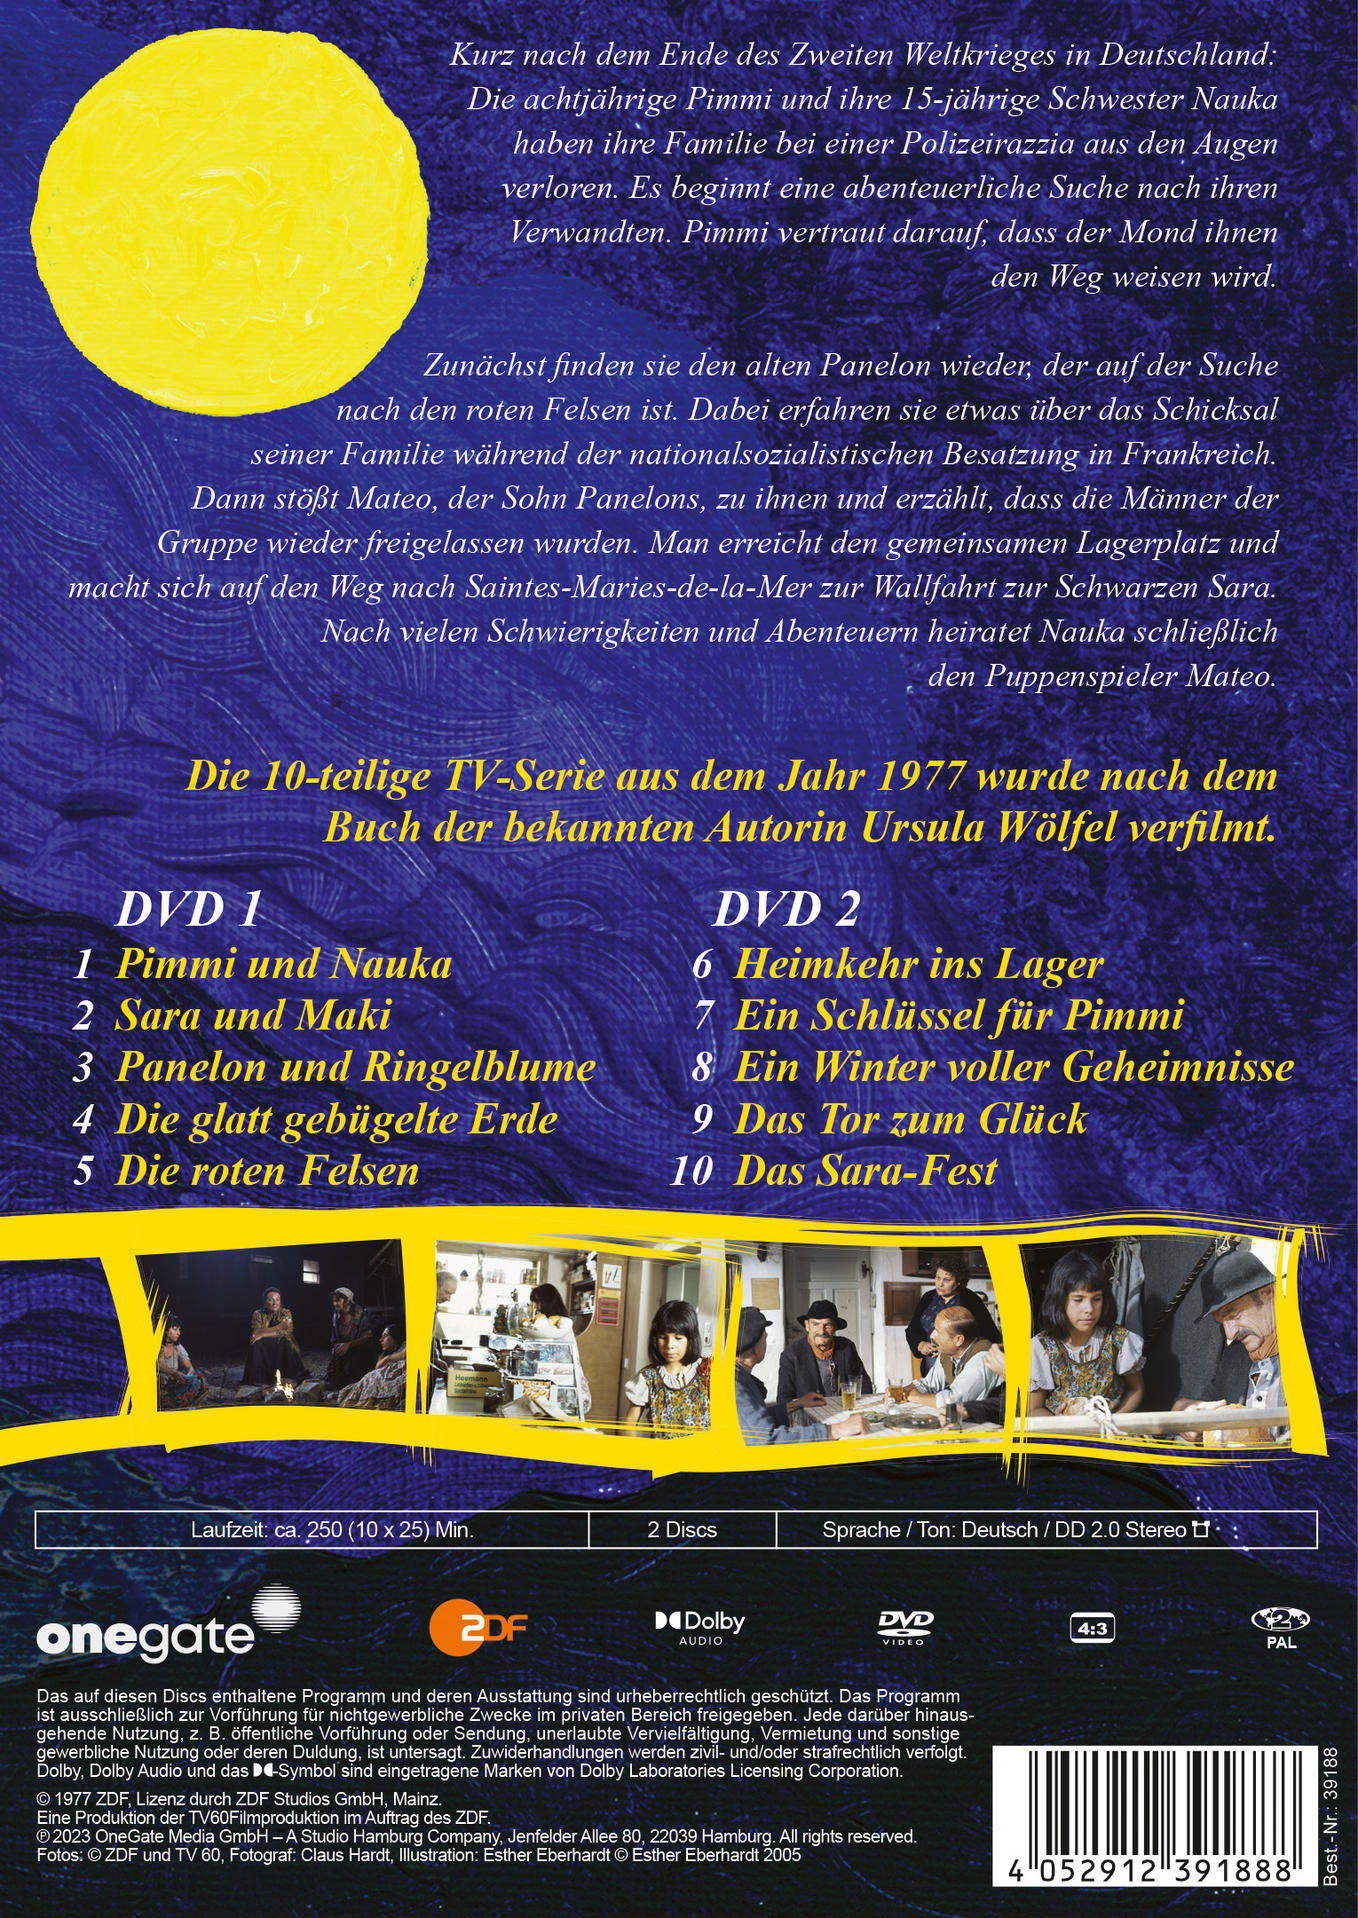 ZDF Flimmerkiste: DVD Mond Mond Mond